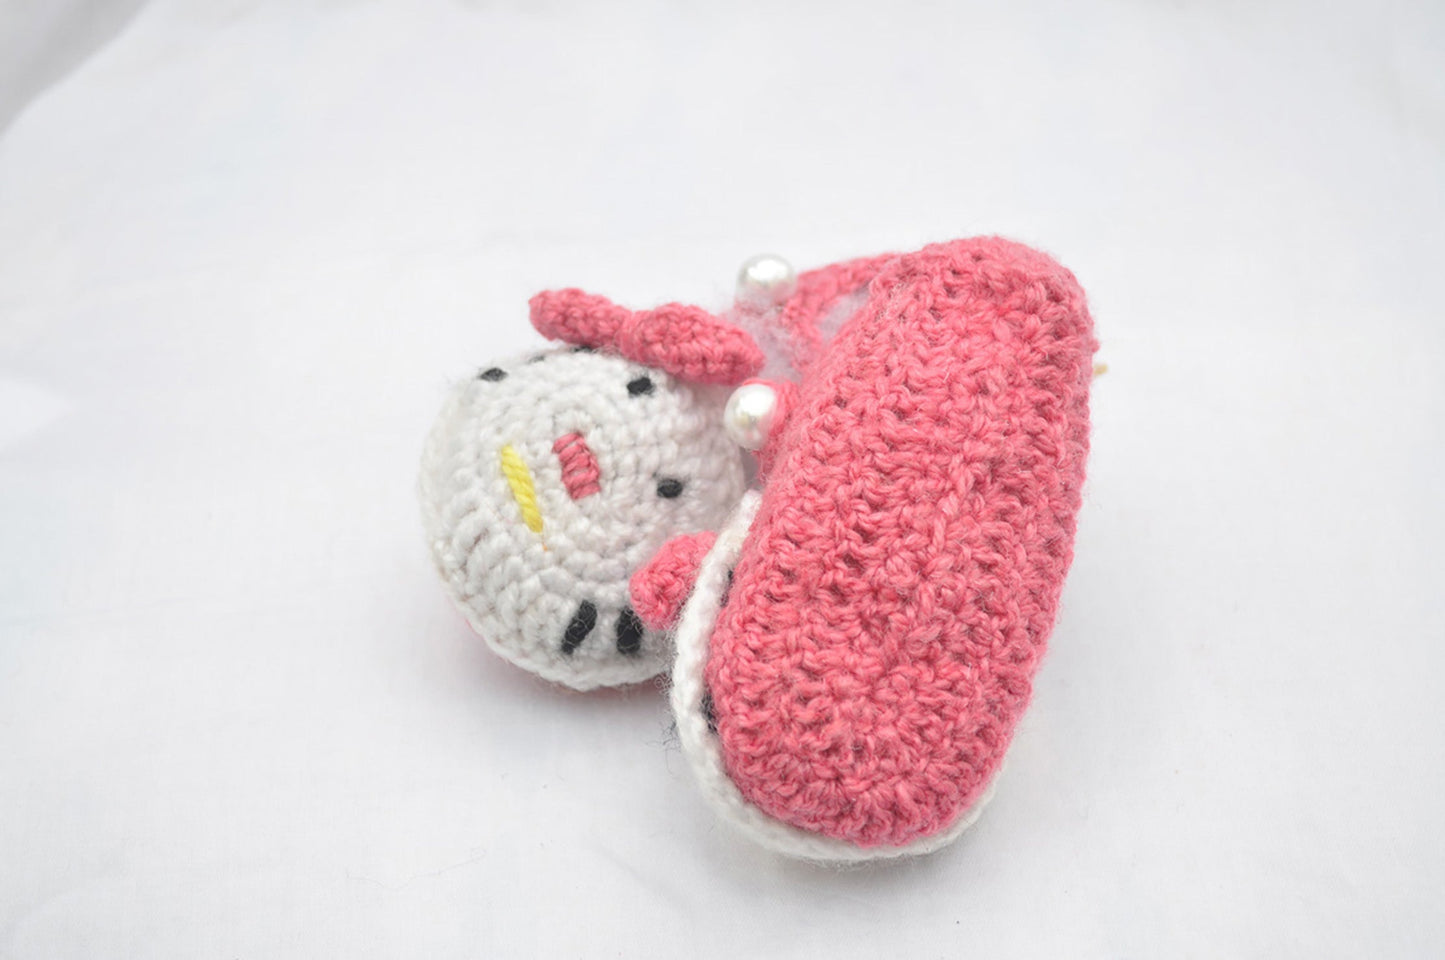 Hand Crocheted- Hello Kitty Booties